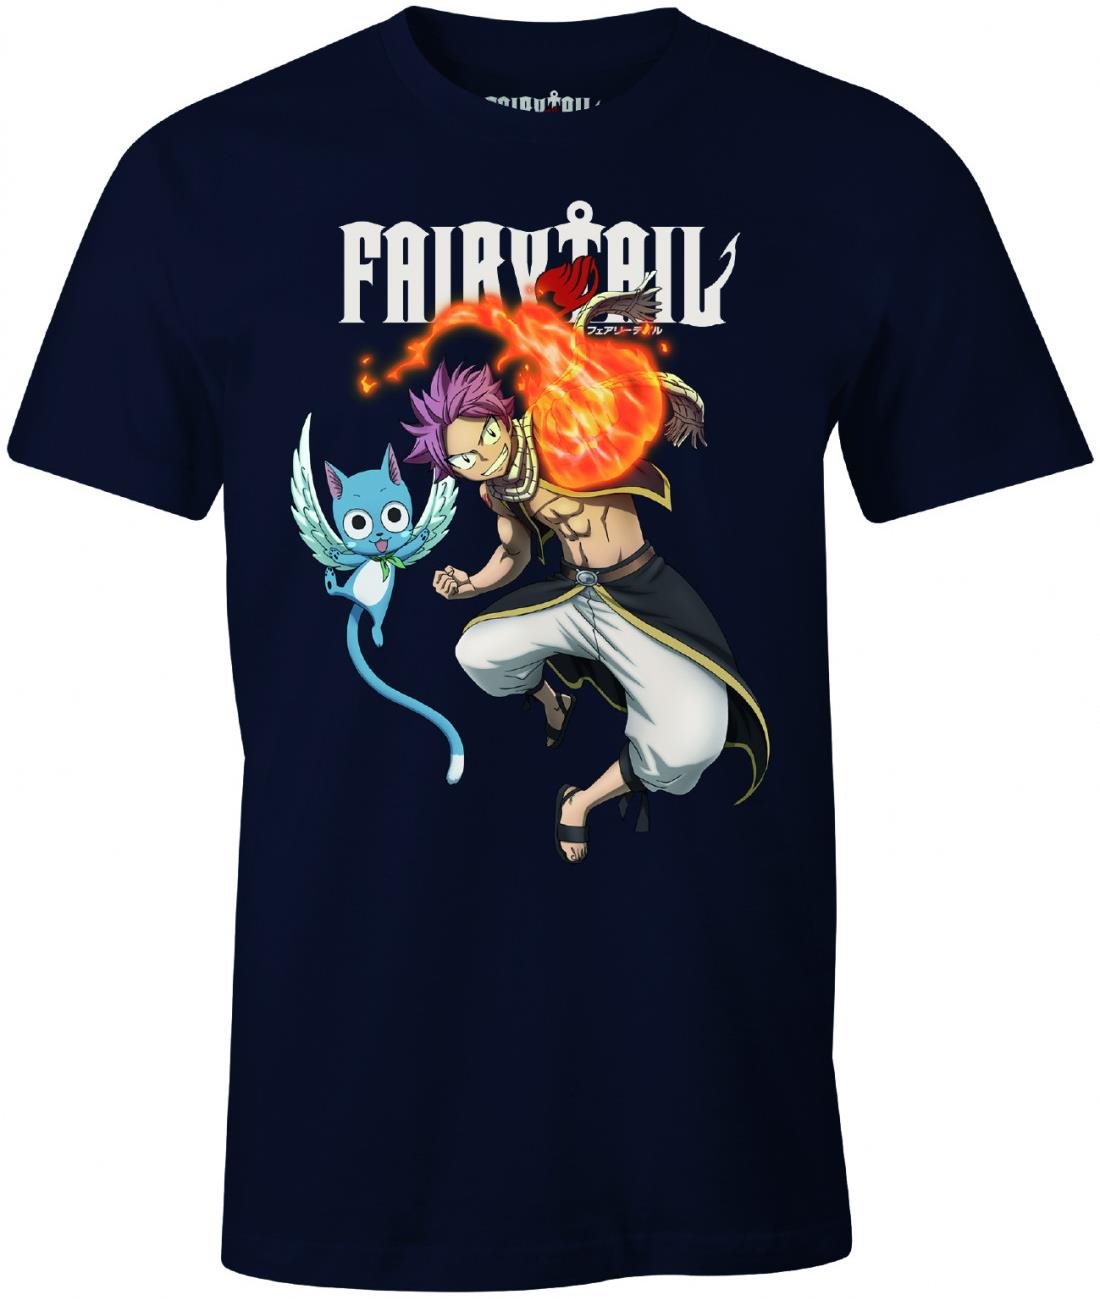 Fairy Tail - Attack of Fairy - póló, M